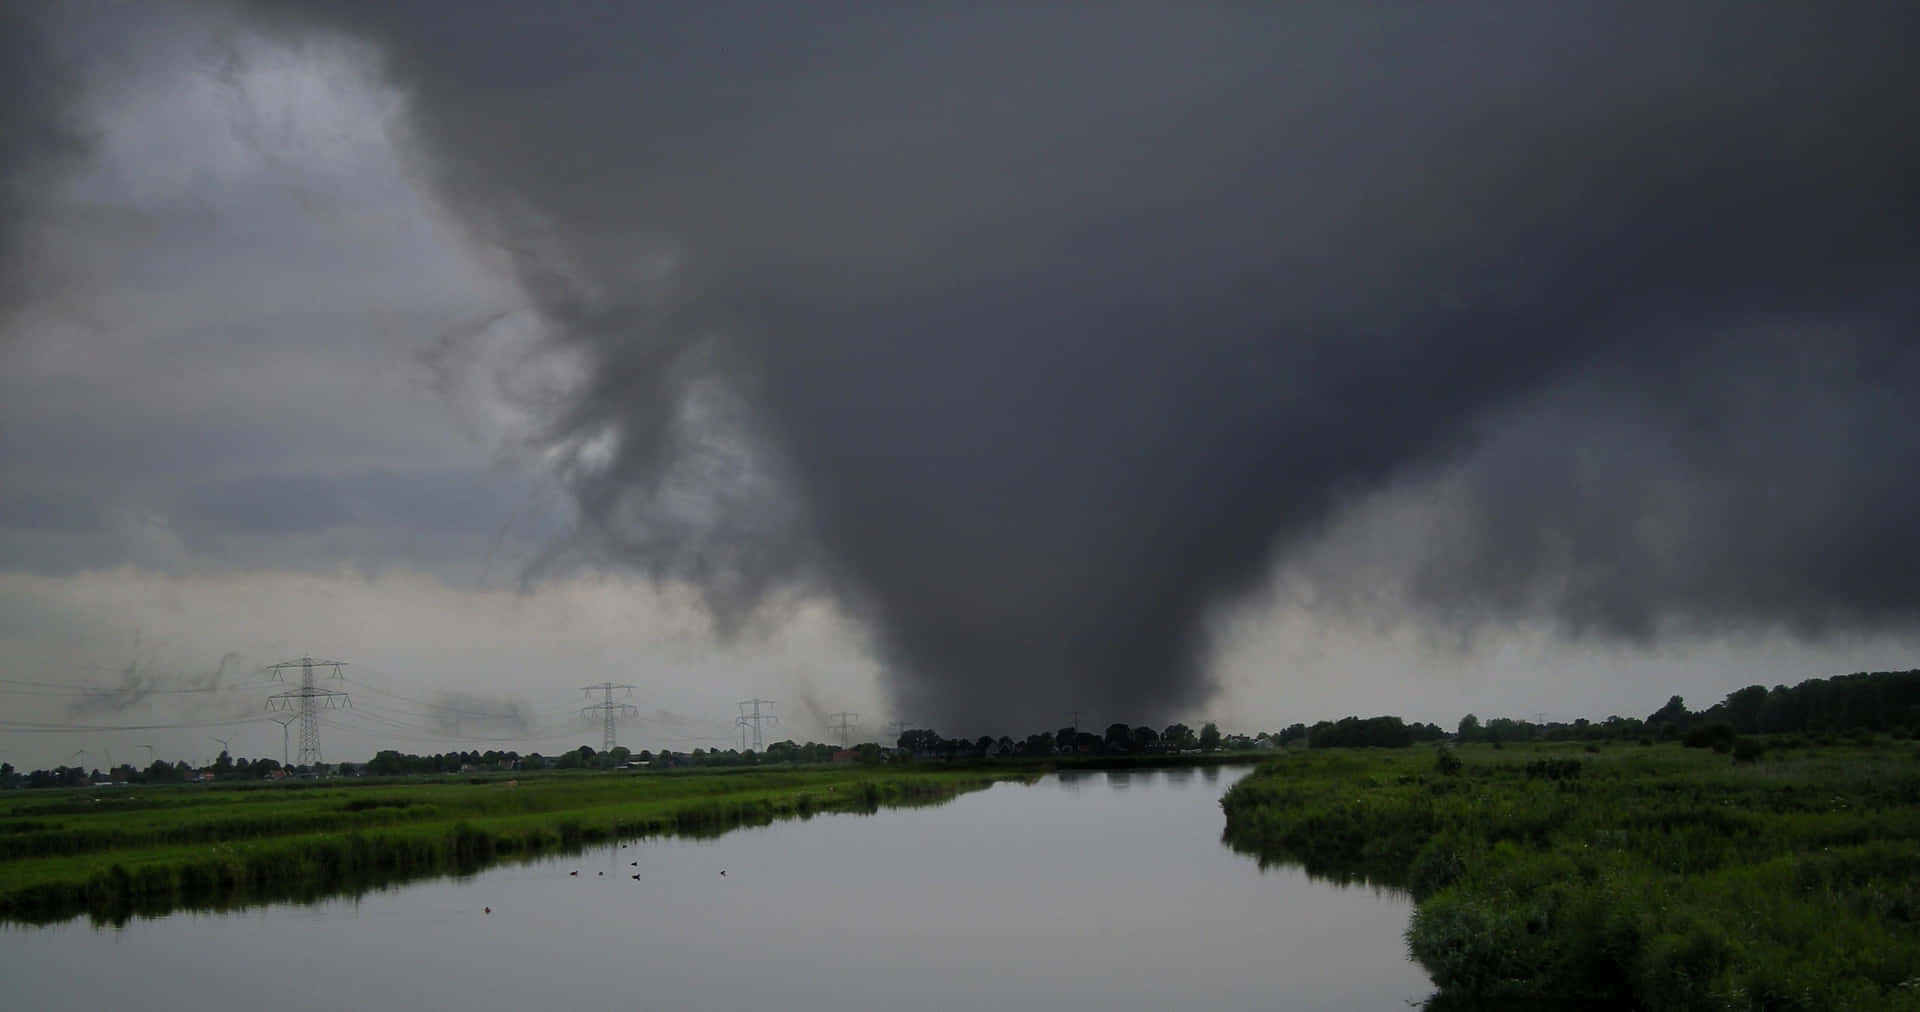 Caption: An Intense Tornado Sweeping Across The Open Field